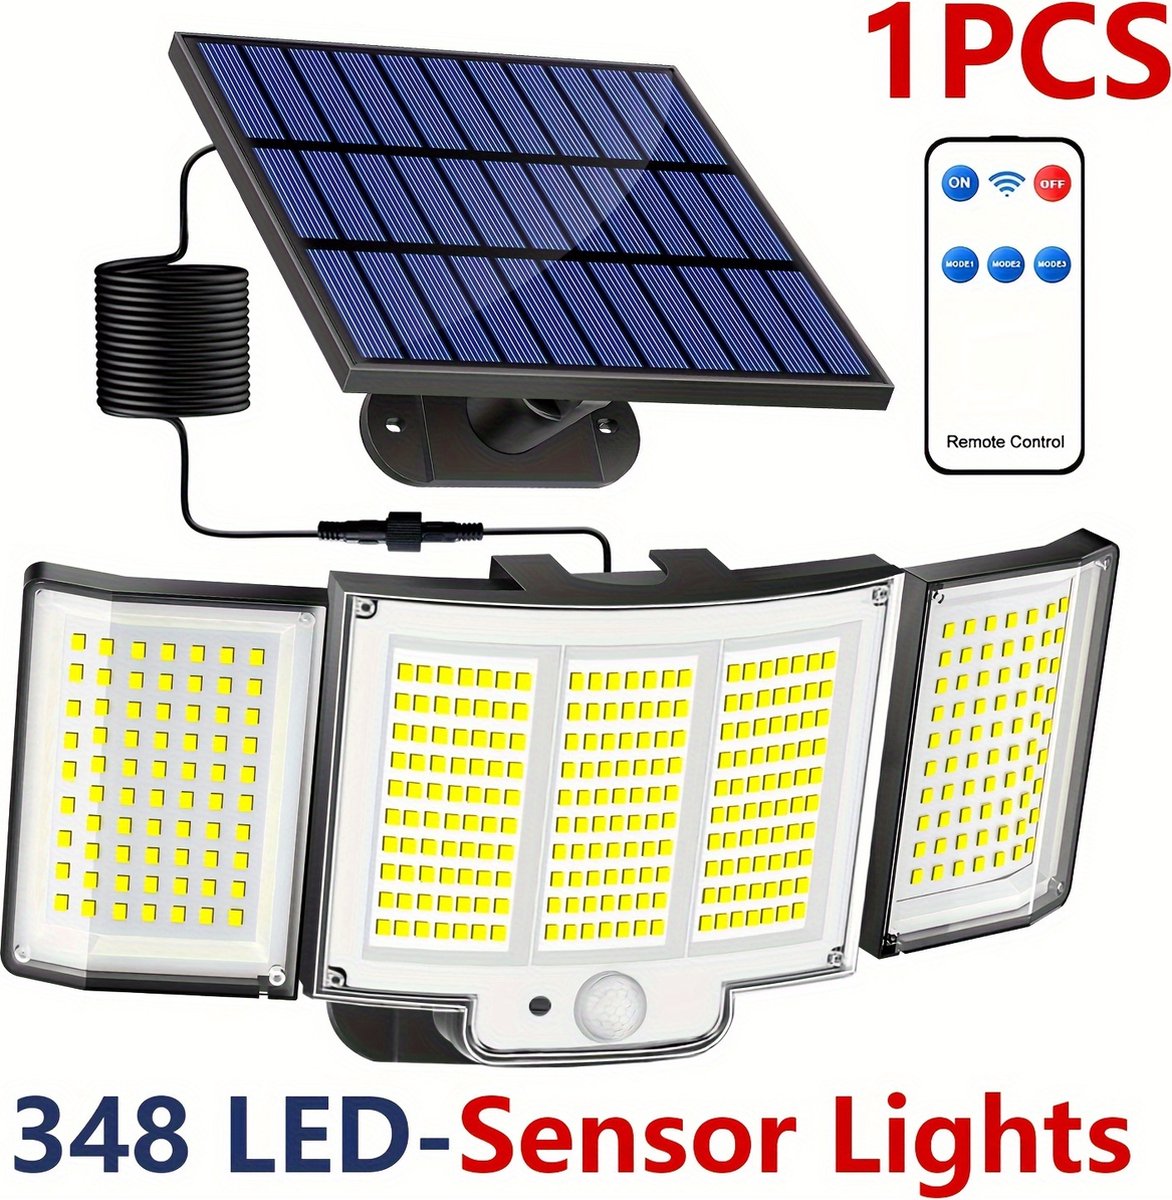 Photonspace Solar Buitenlamp met Bewegingssensor - Wandlamp met Sensor - Zonne-energie - 348 LED's - IP65